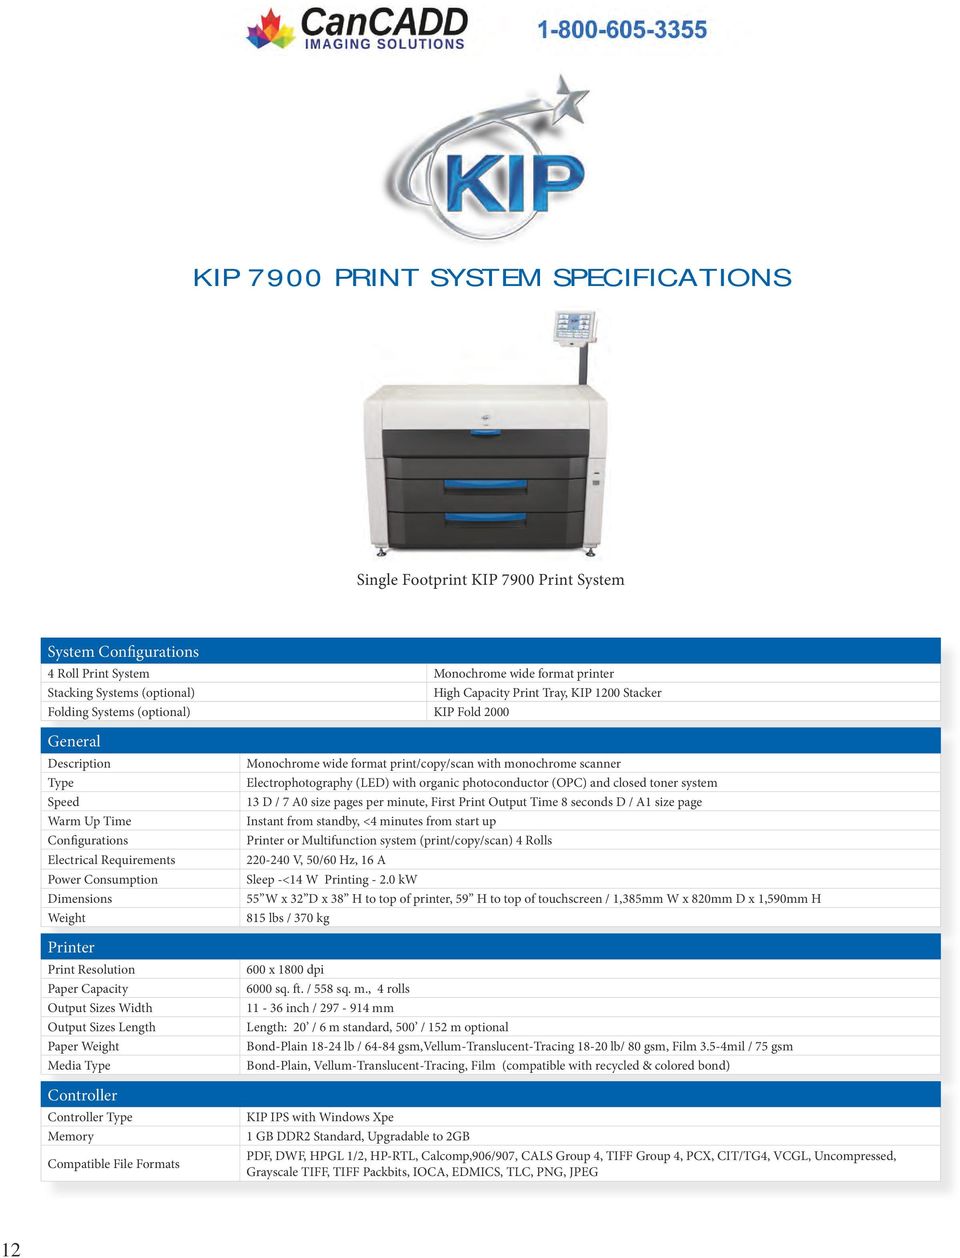 Kip 5000 driver windows 10 download